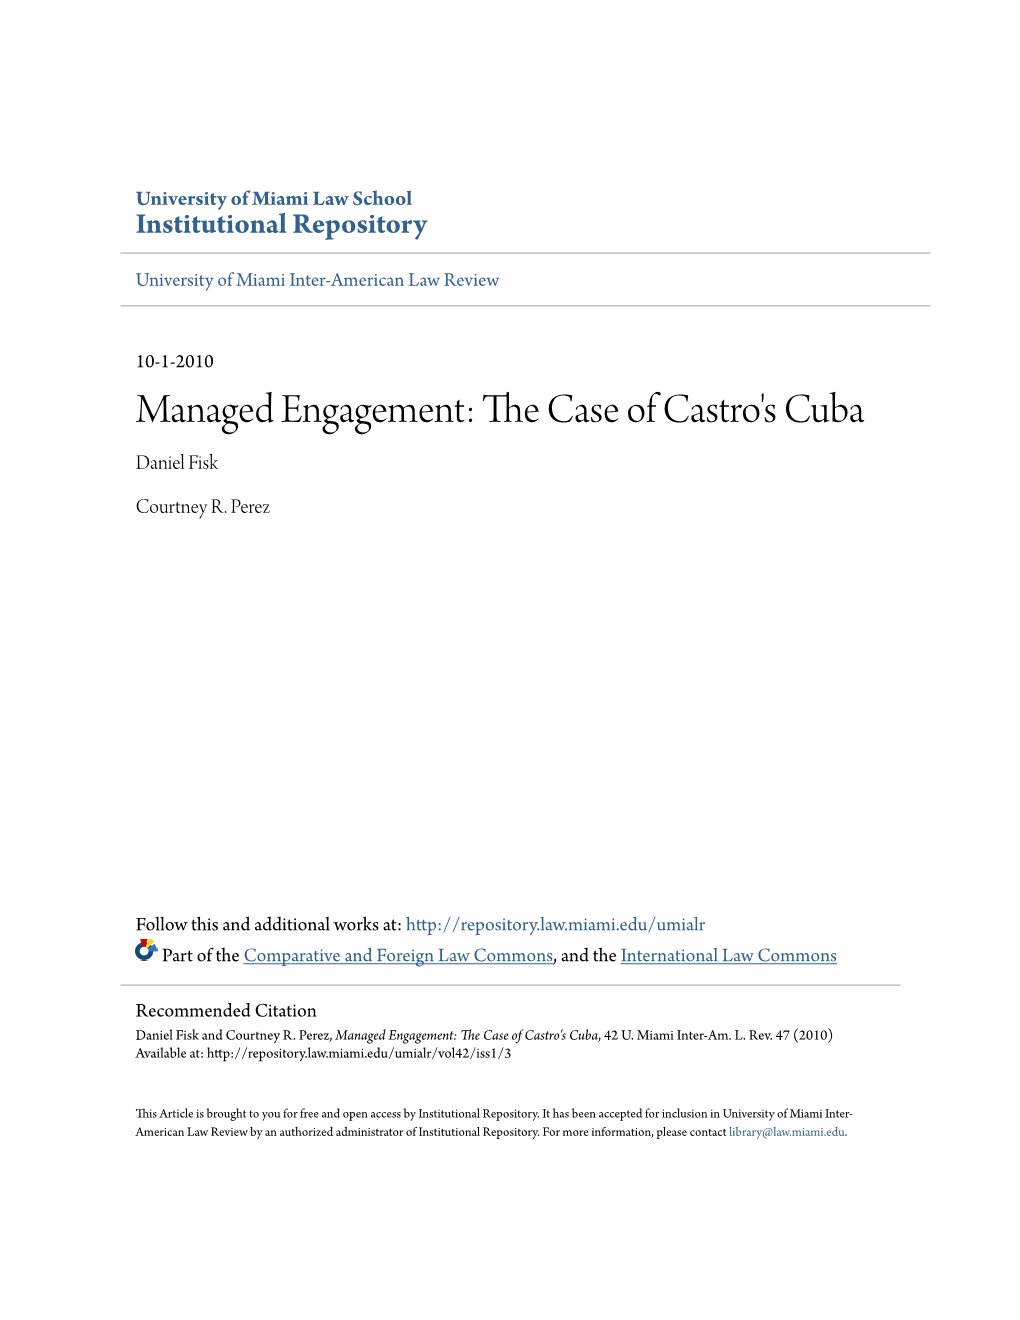 Managed Engagement: the Case of Castro's Cuba, 42 U